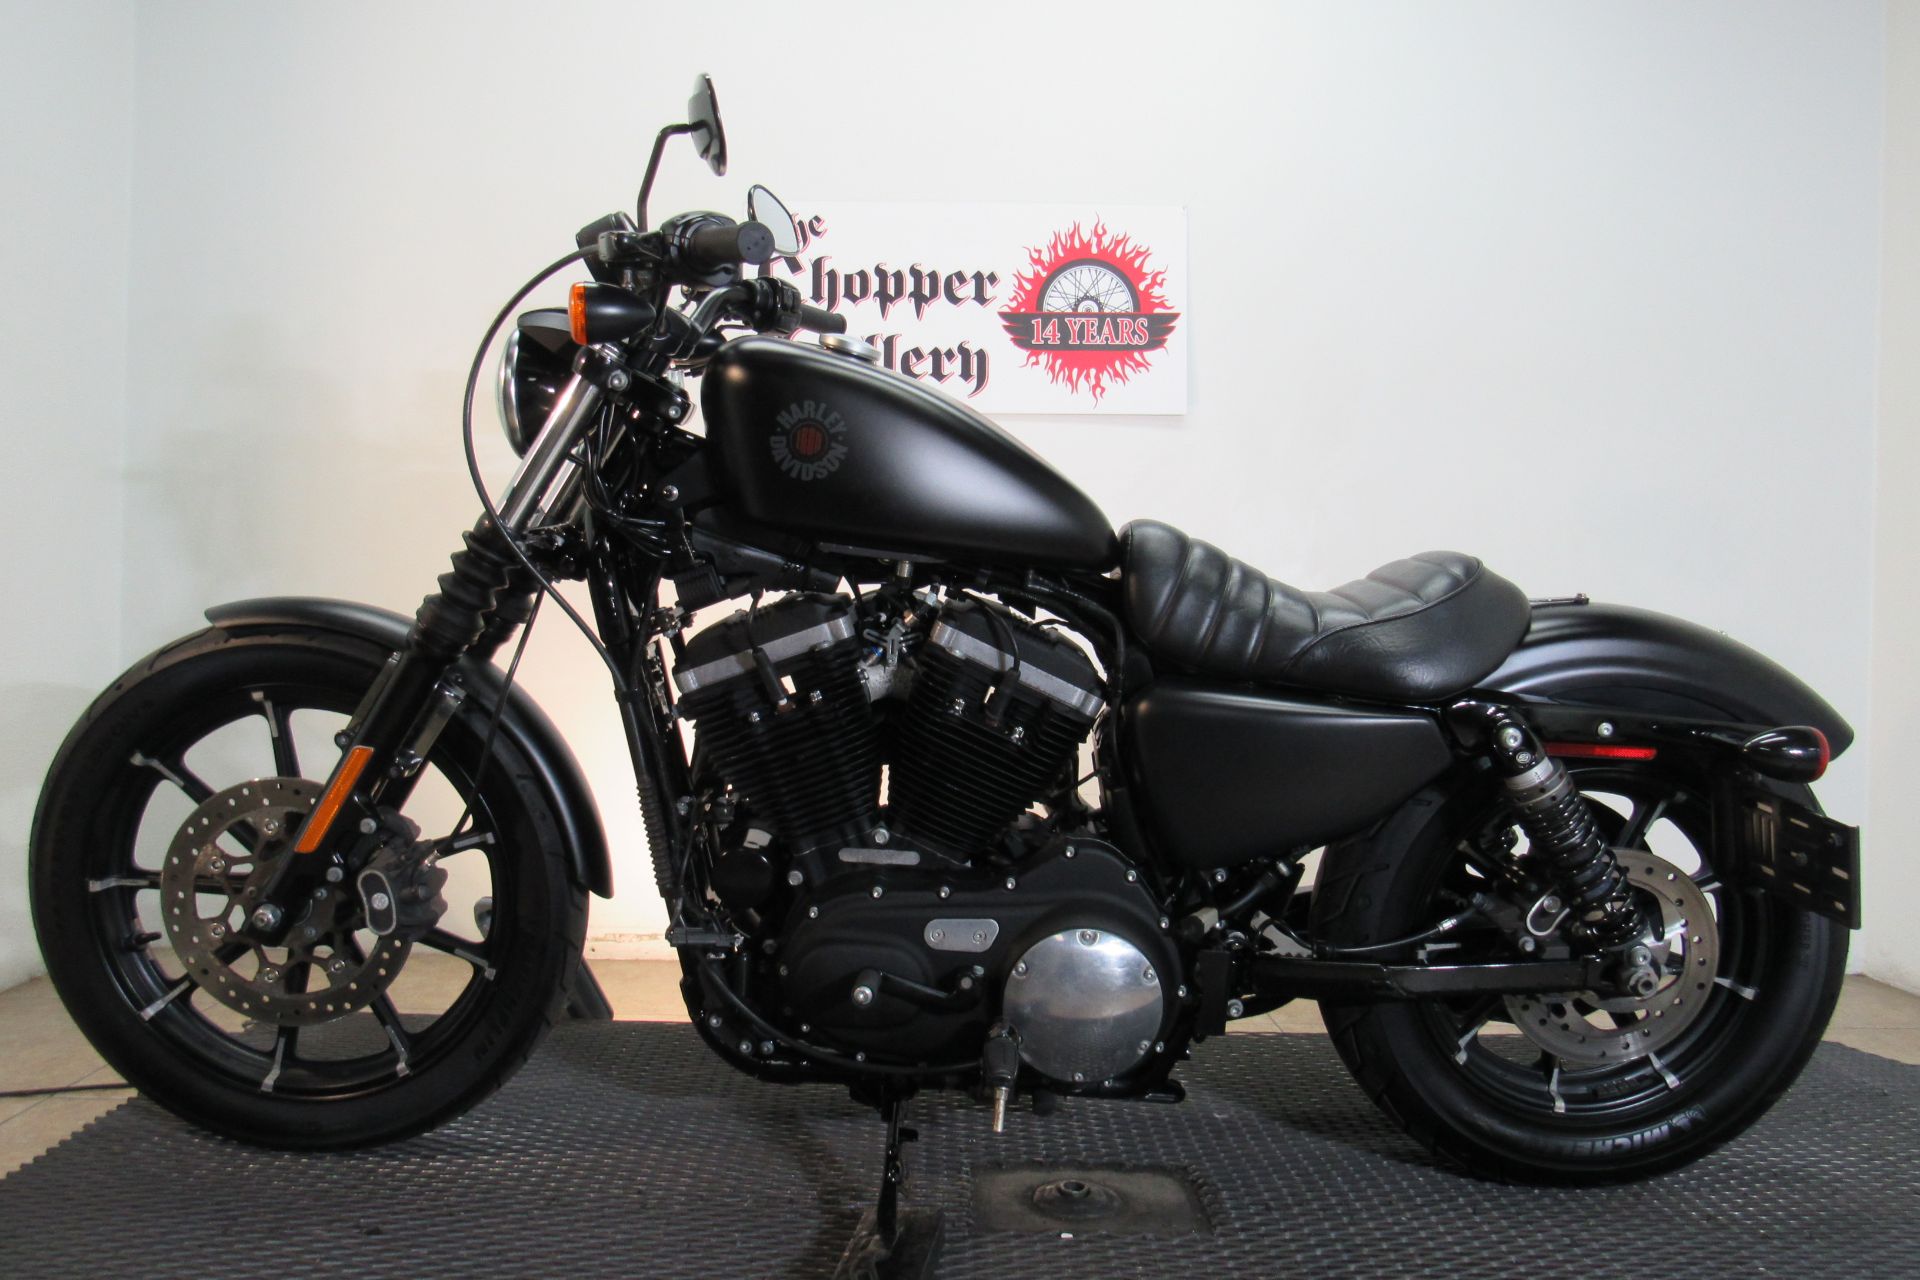 2020 Harley-Davidson Iron 883™ in Temecula, California - Photo 2